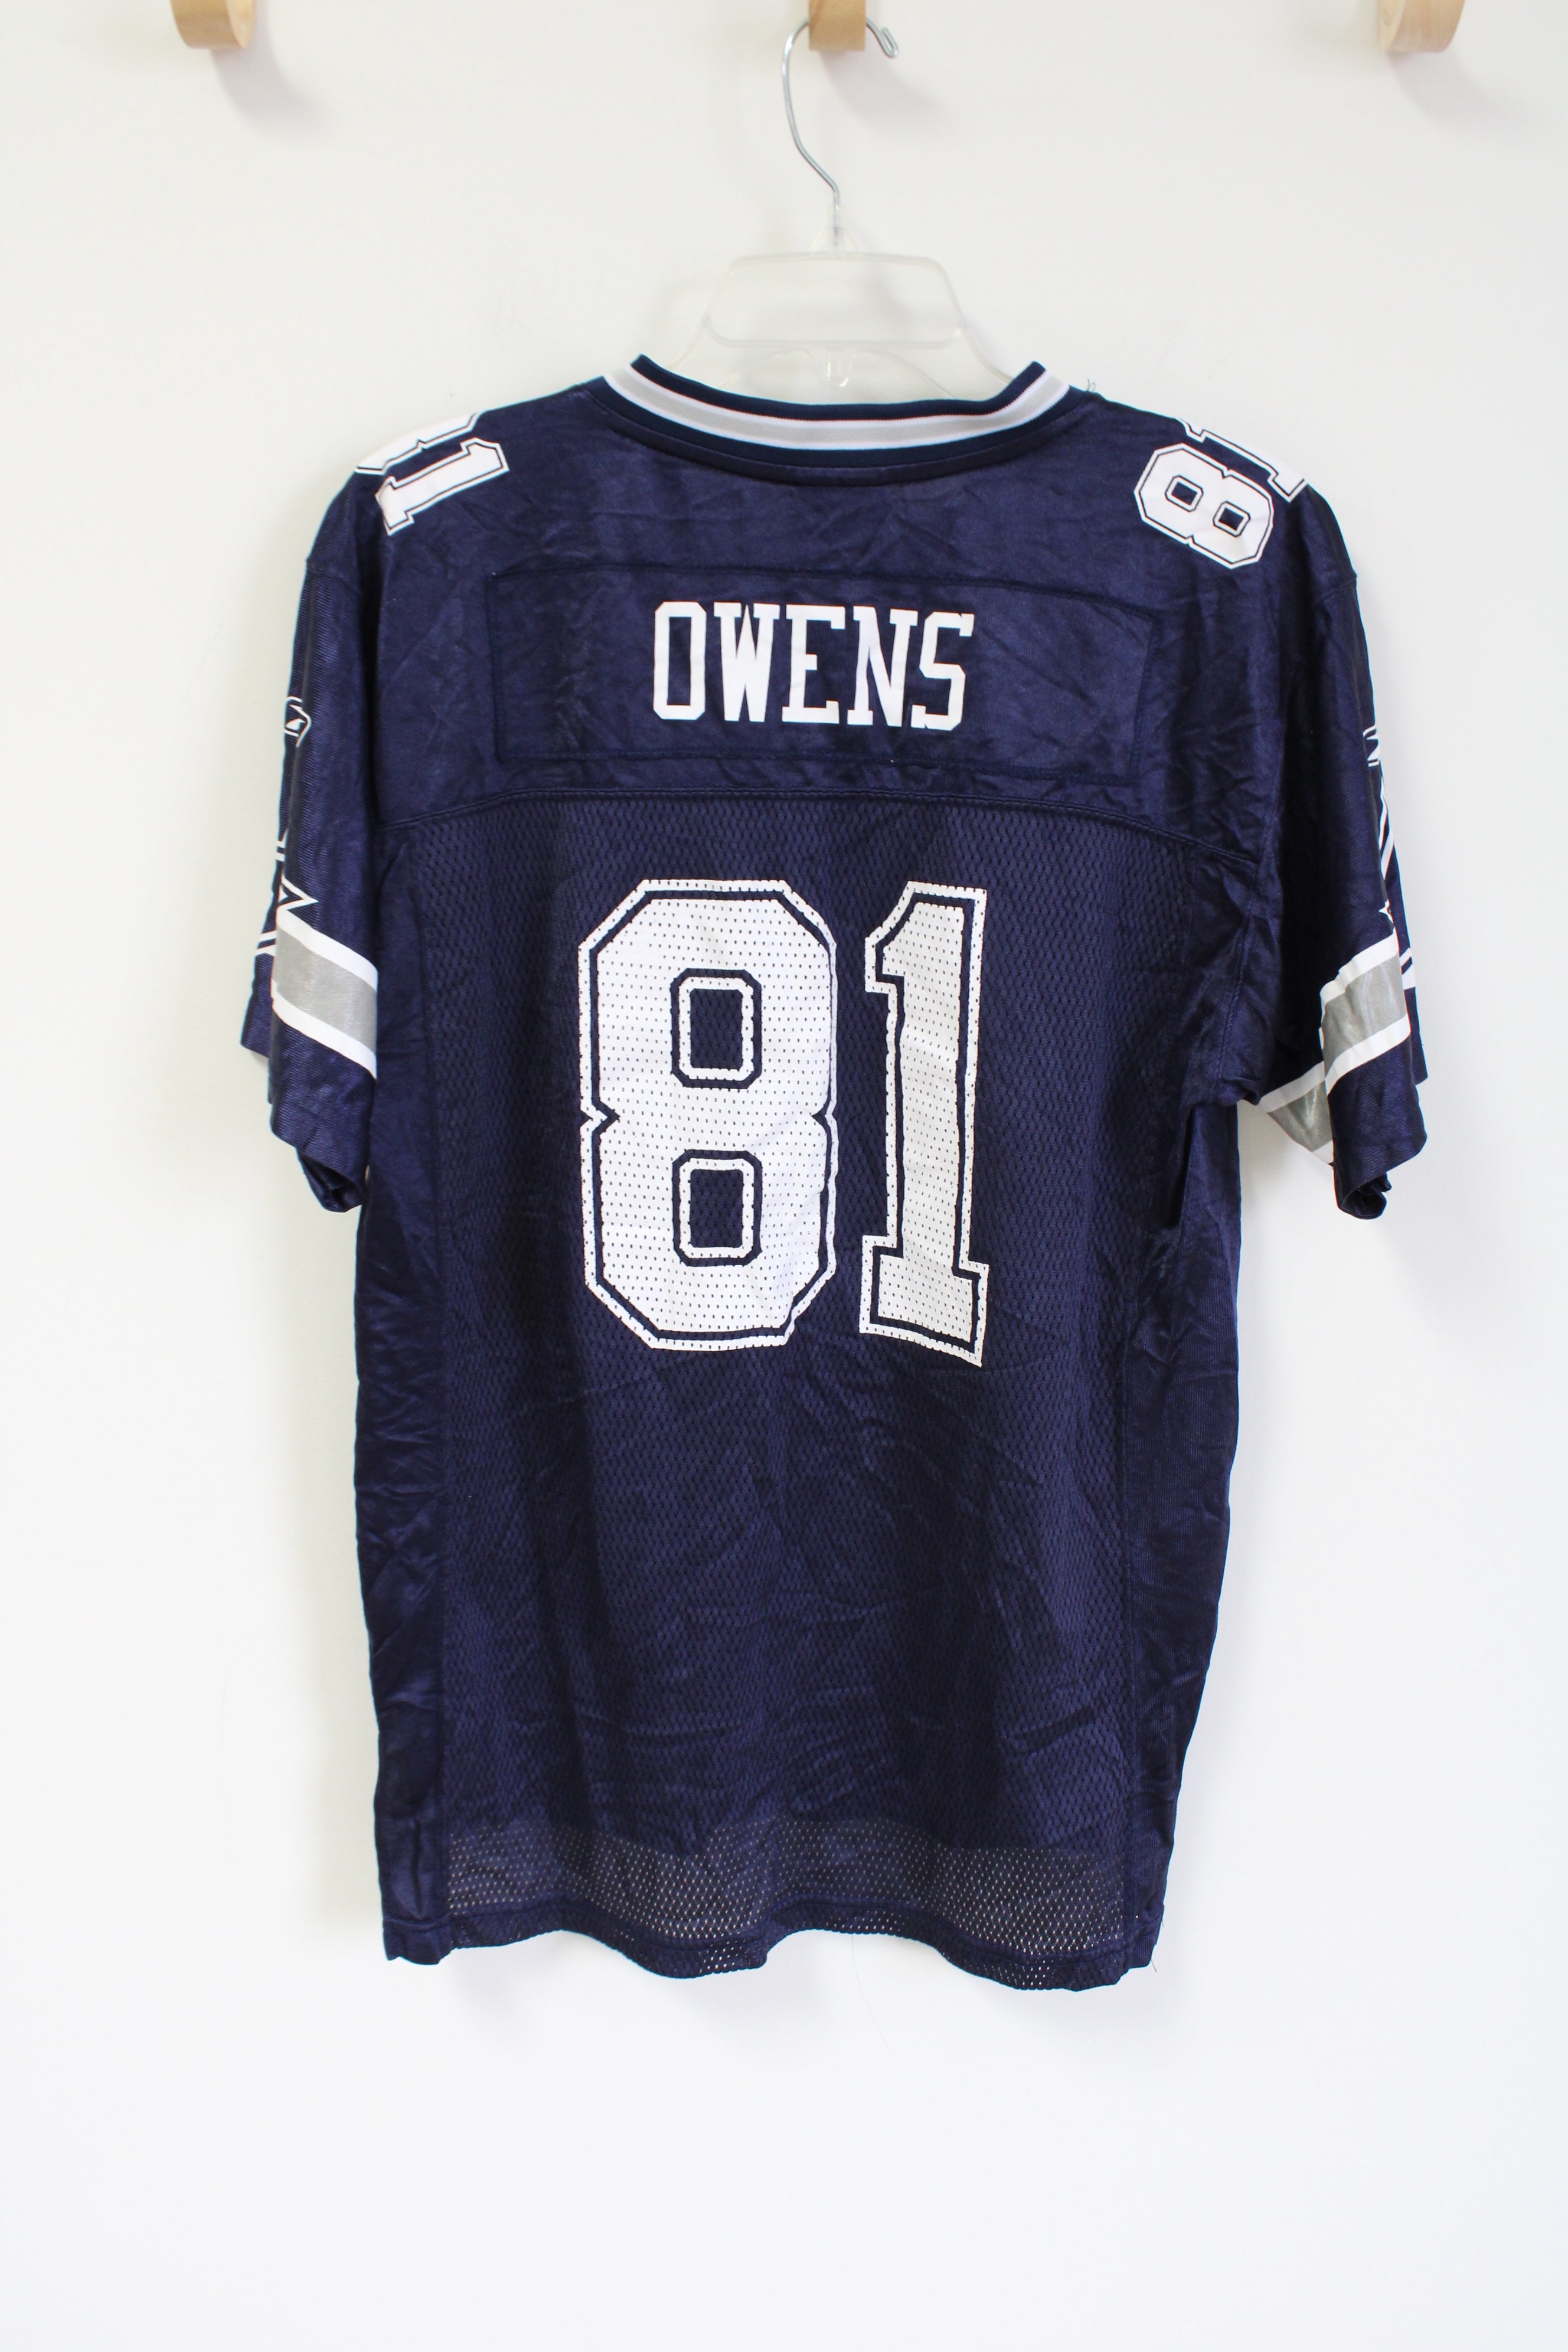 Reebok NFL On Field Dallas Cowboys #81 Owens Blue Jersey | Youth XL (18/20)